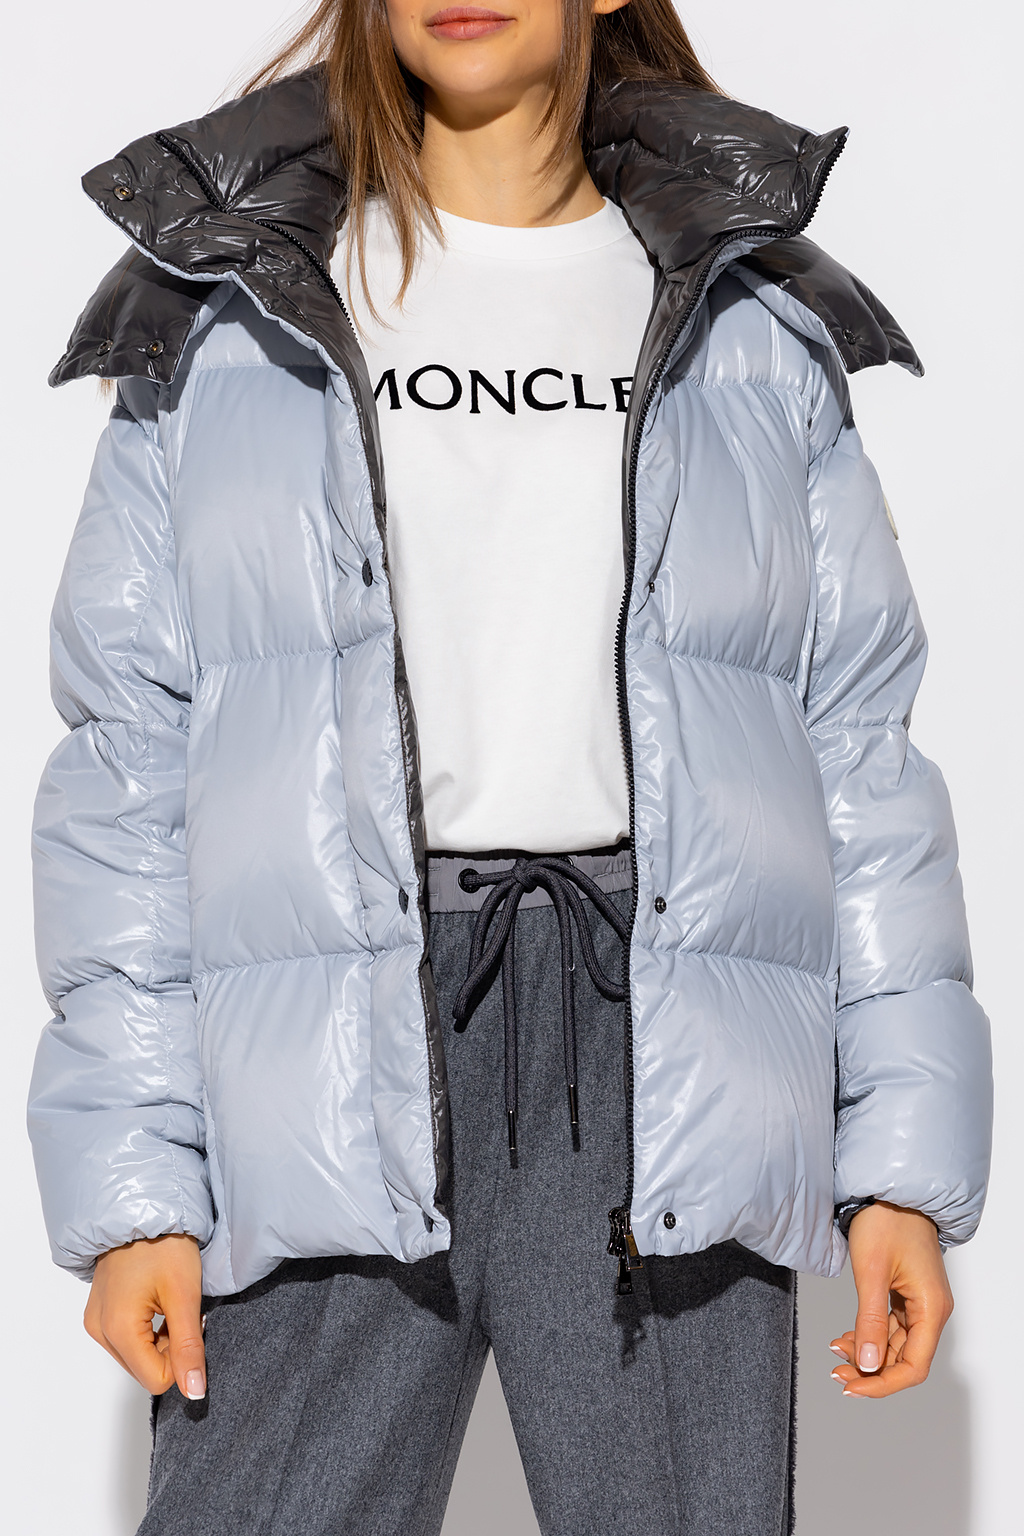 Moncler ‘Parana’ hooded down jacket